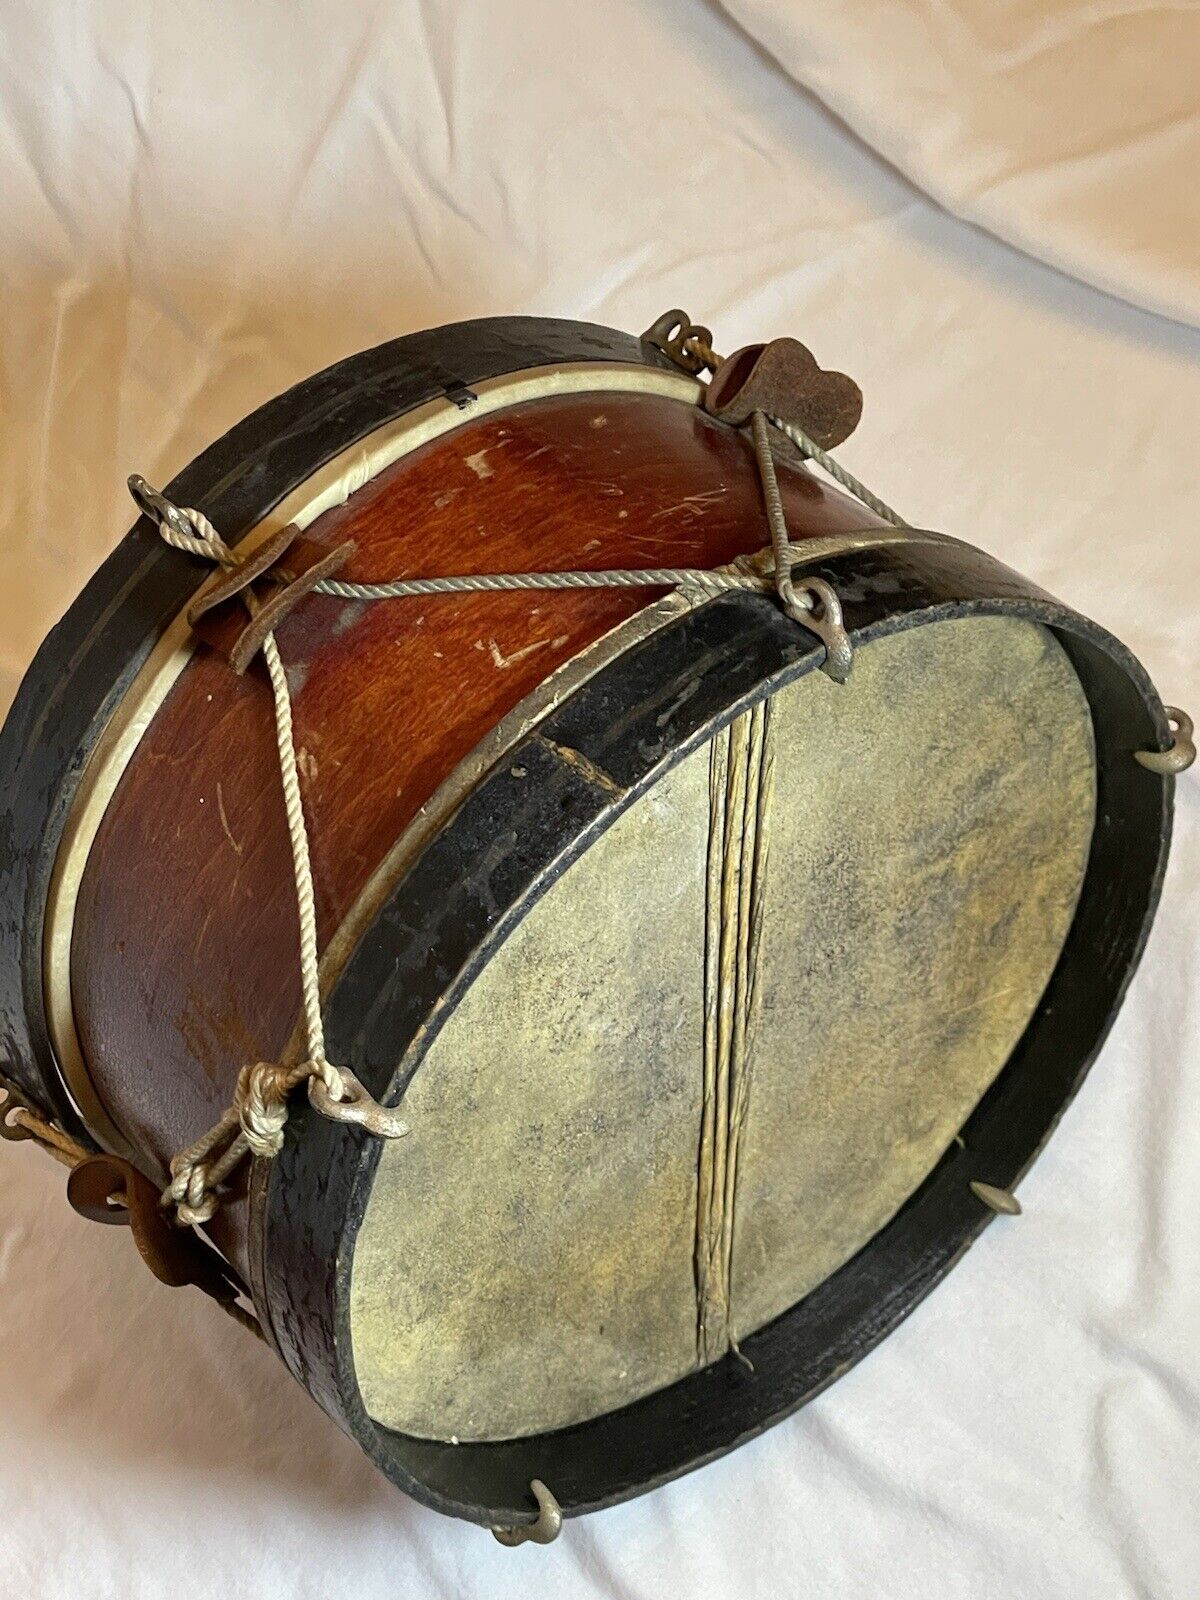 CIVIL WAR ERA Vintage antique drum Metal Parts Sand Casted From Melted AMMO Guts